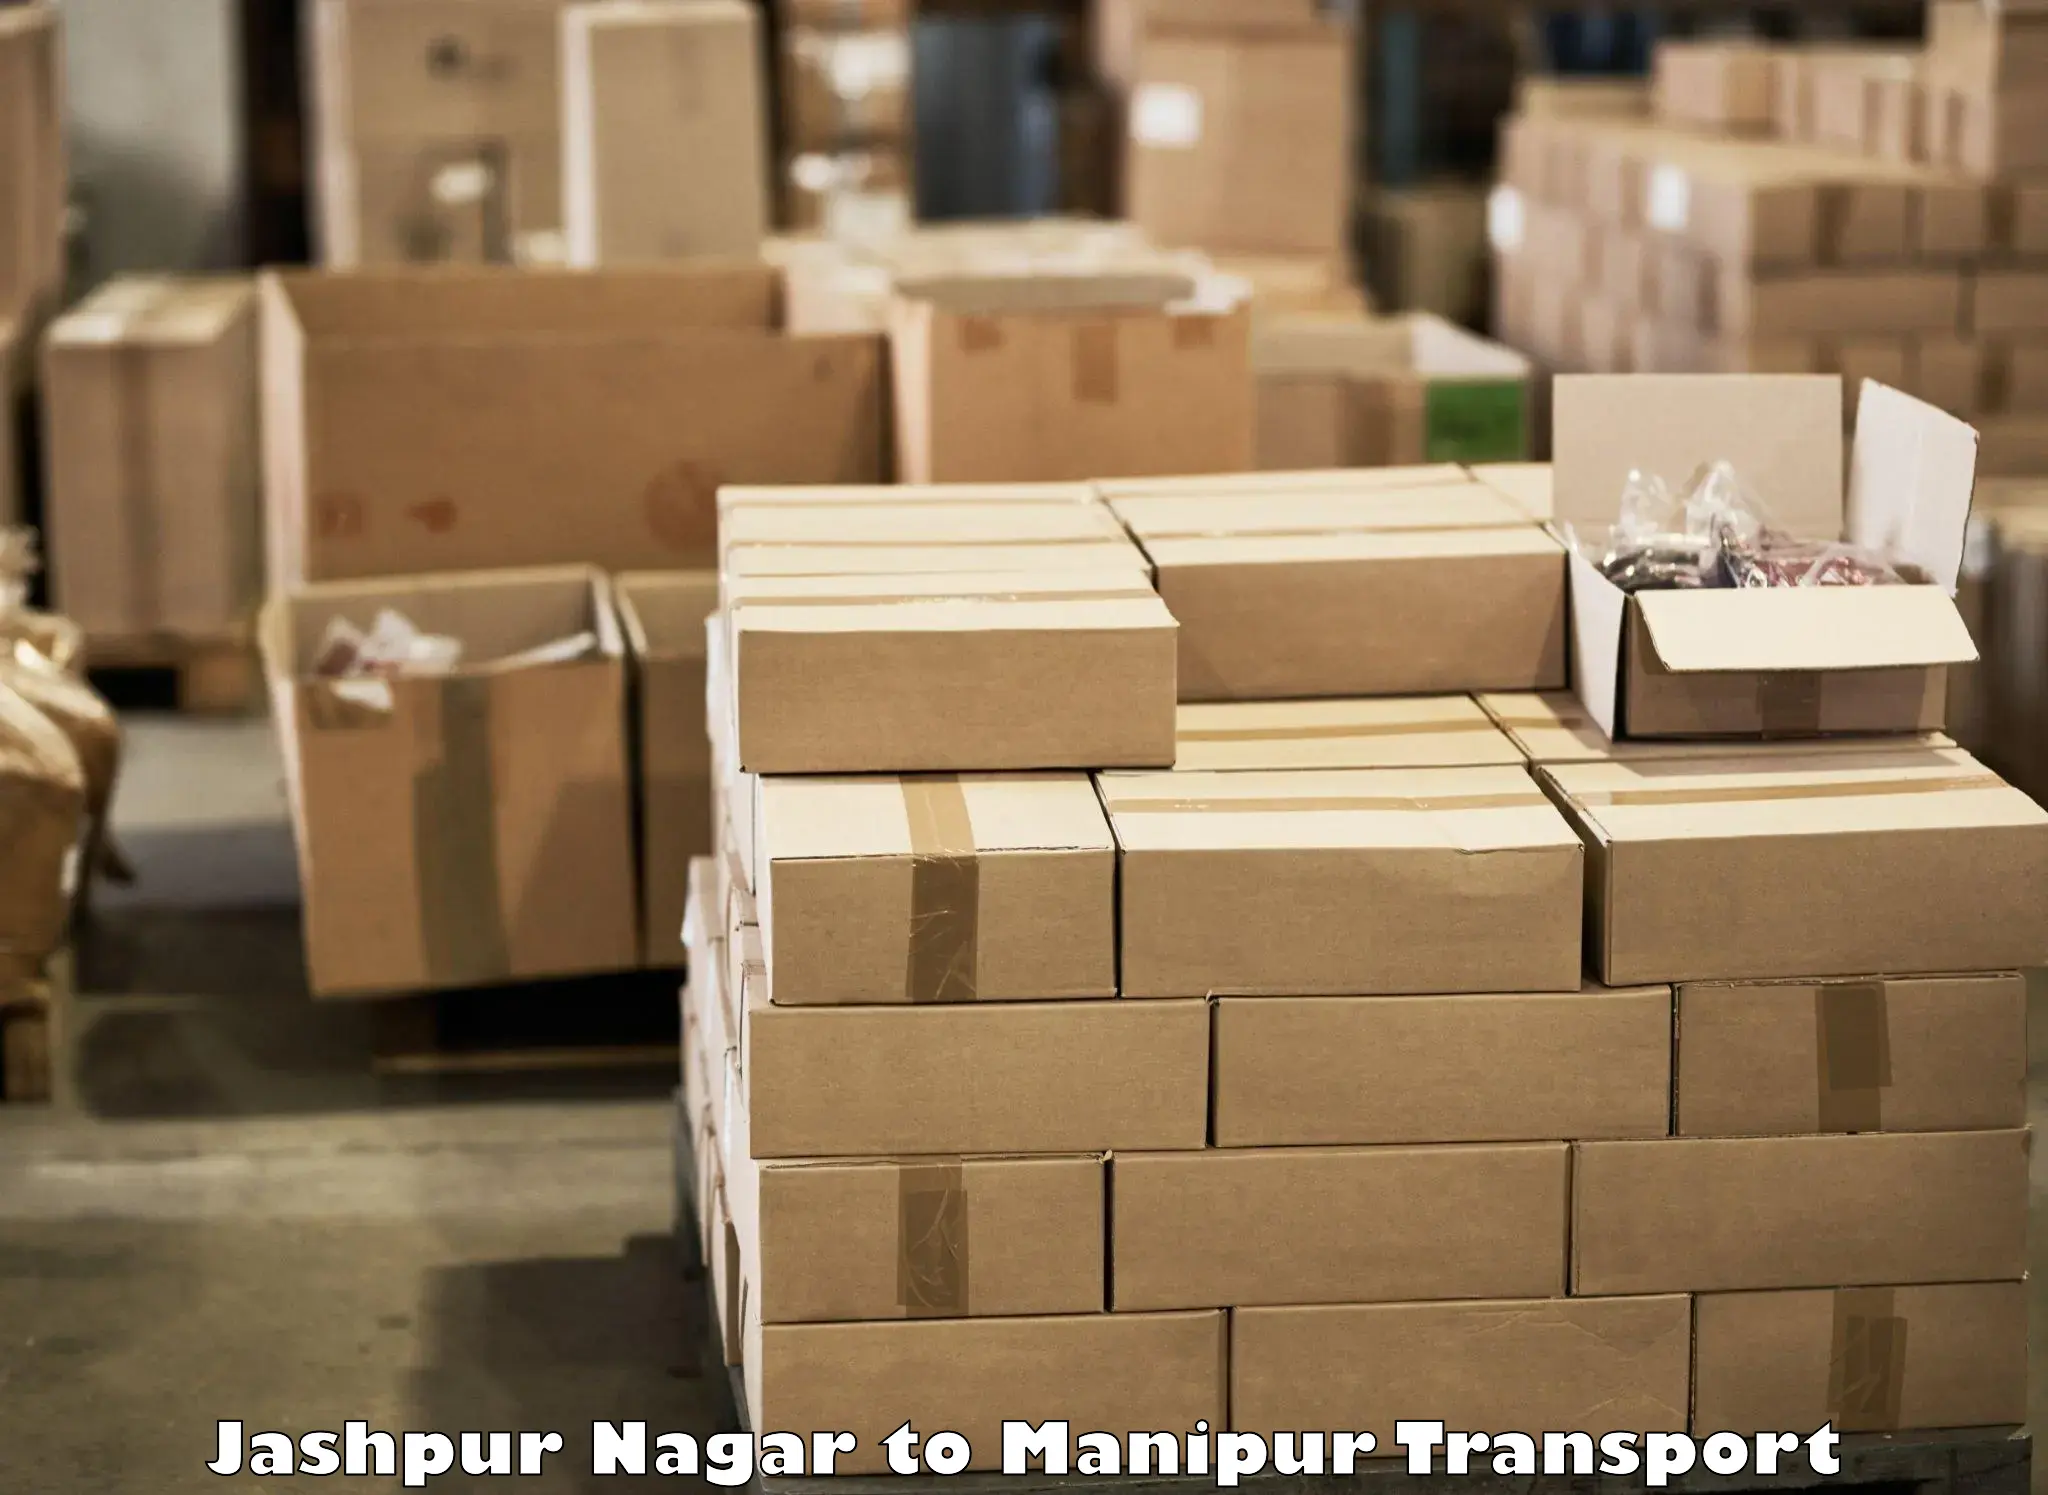 Truck transport companies in India Jashpur Nagar to Senapati